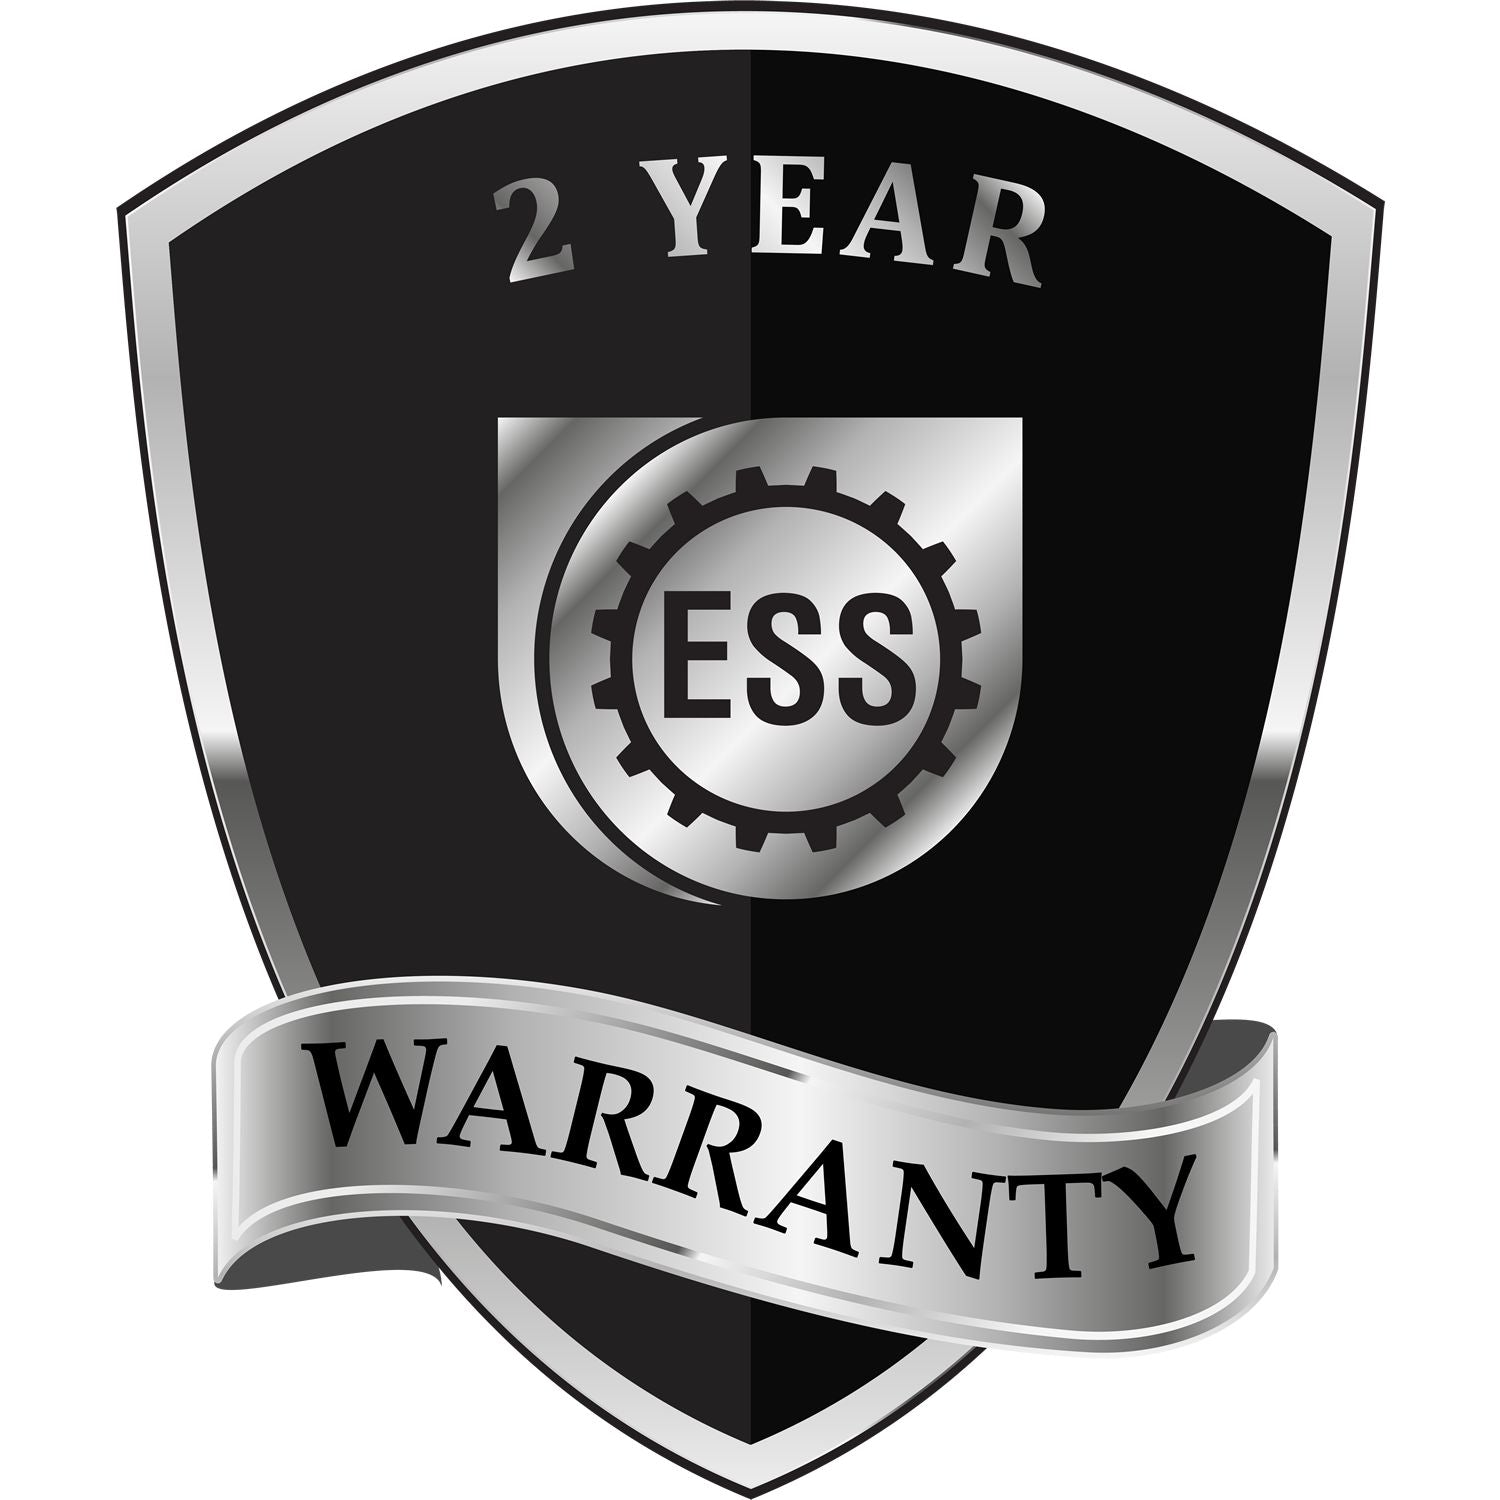 A badge or emblem showing a warranty icon for the Long Reach Virginia Land Surveyor Seal